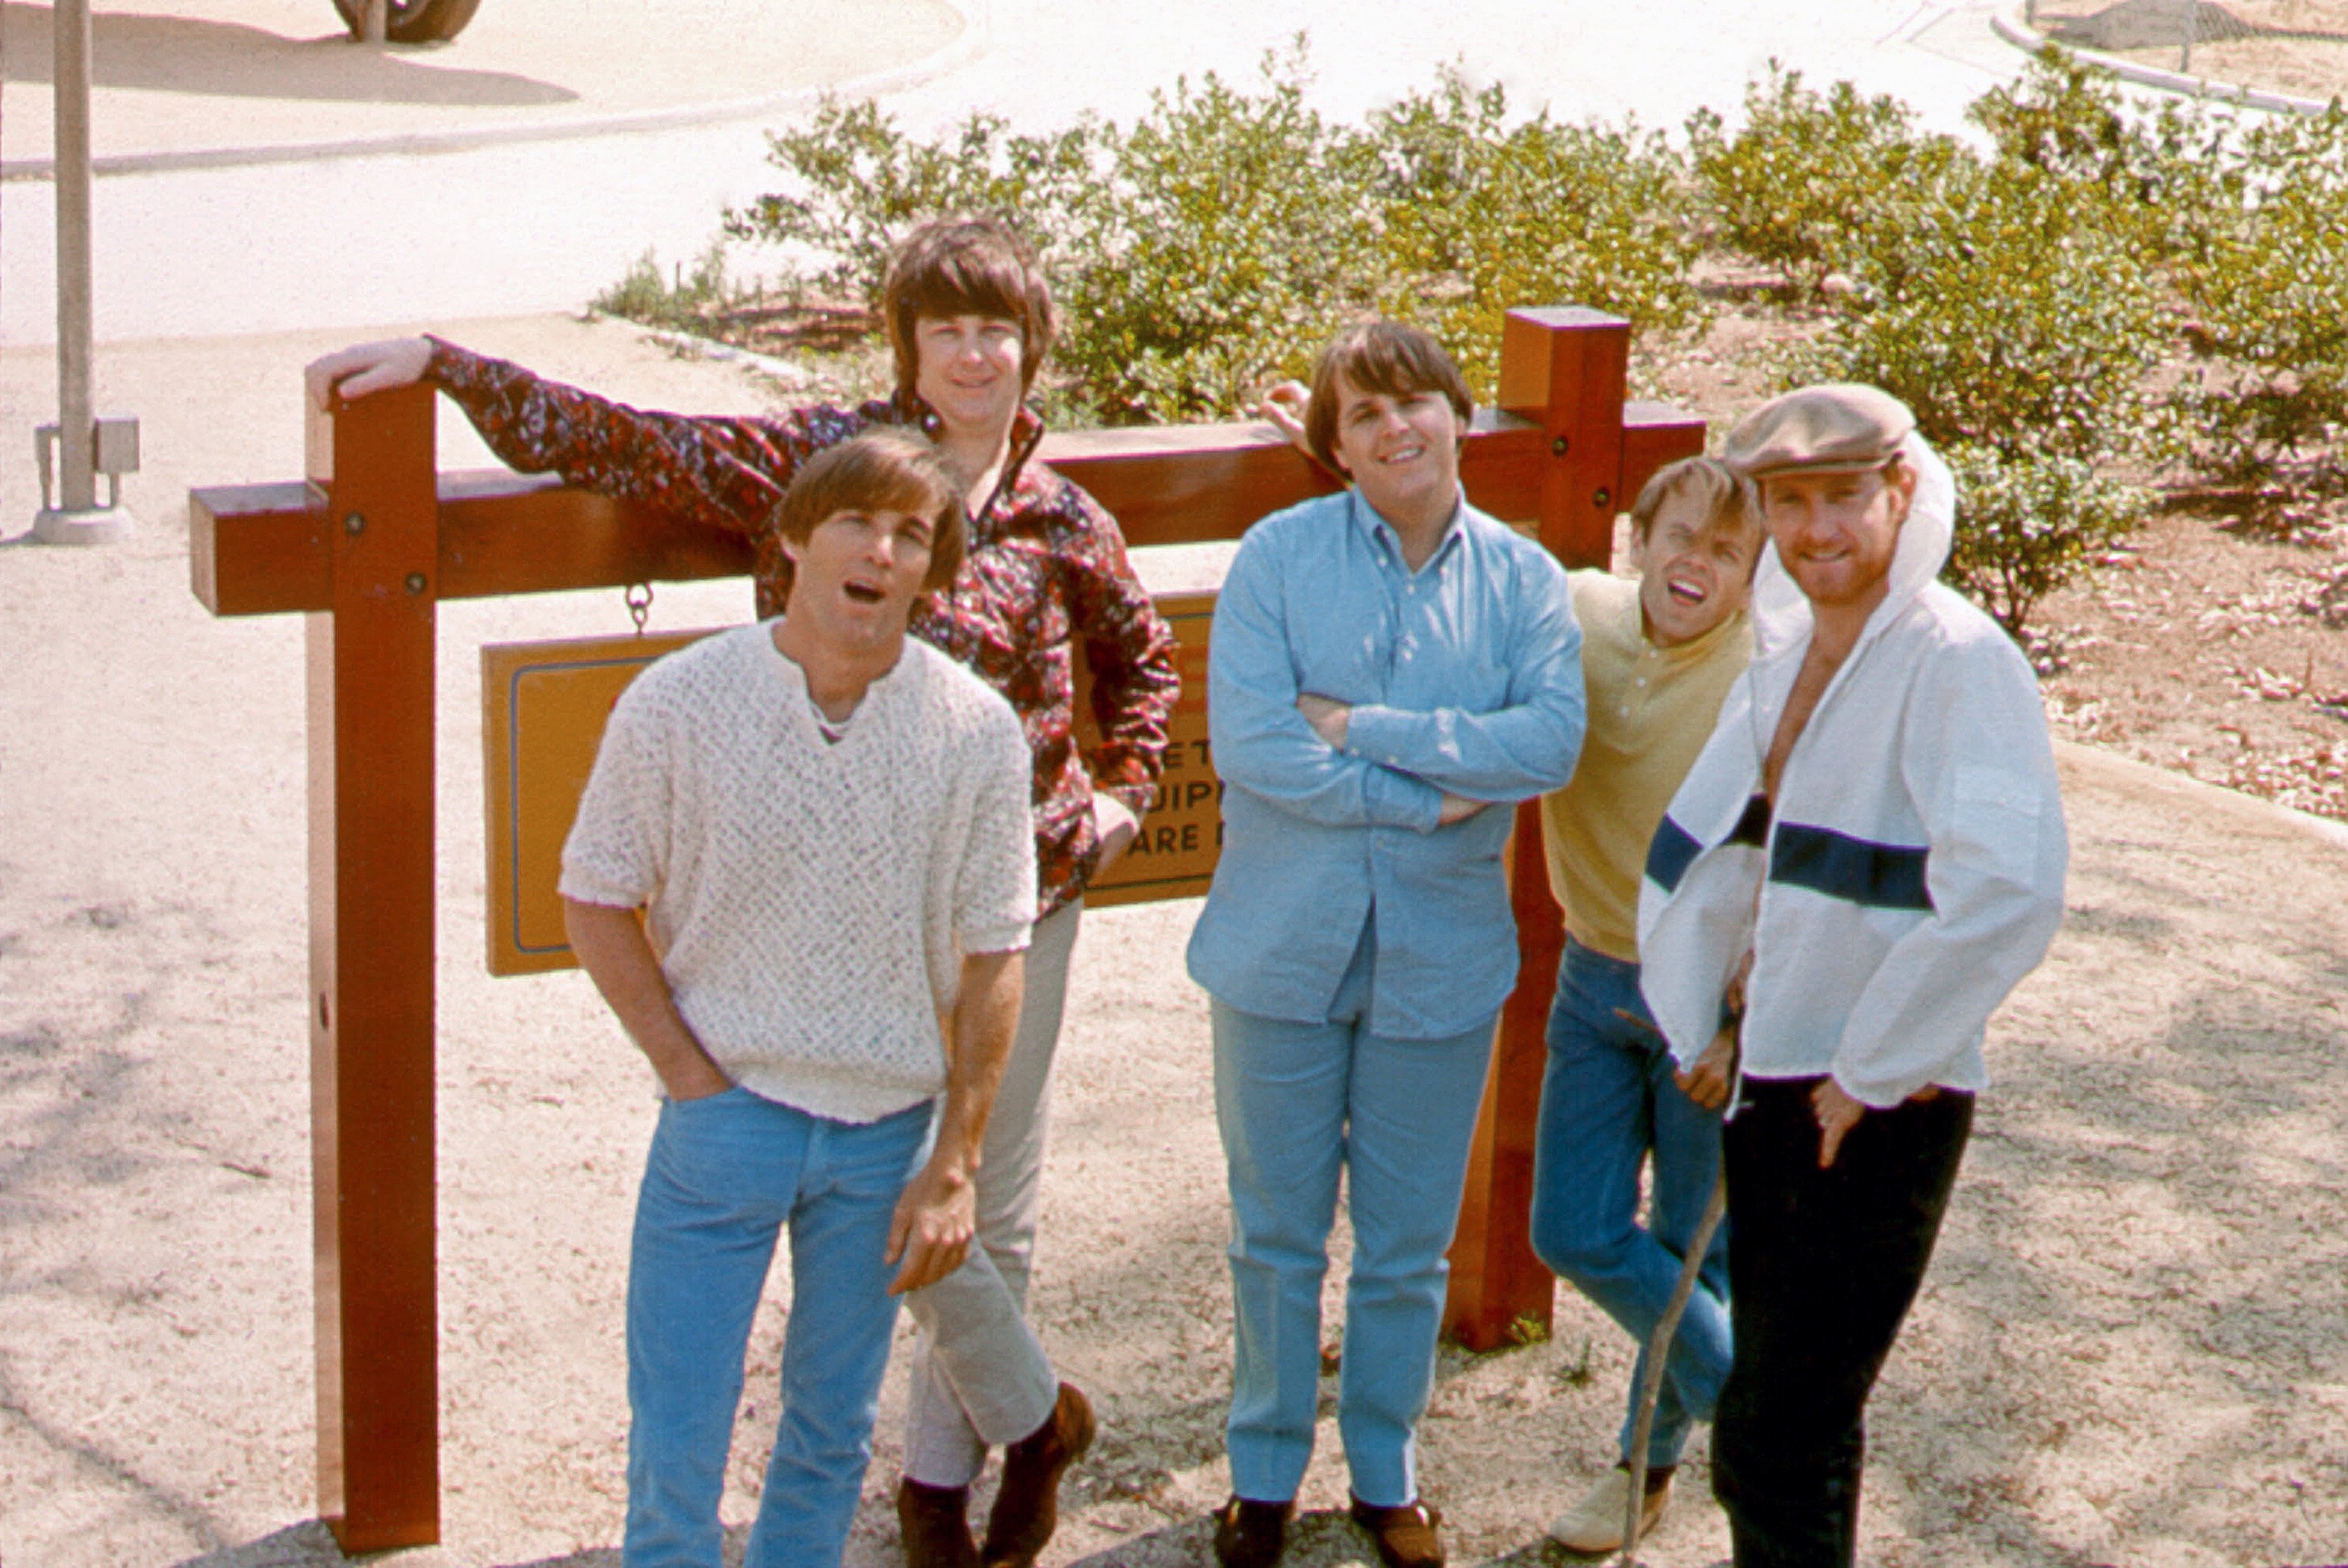 Rock and roll group the Beach Boys pose in 1965 (Dennis Wilson, Brian Wilson, Carl Wilson, Al Jardine, Mike Love)